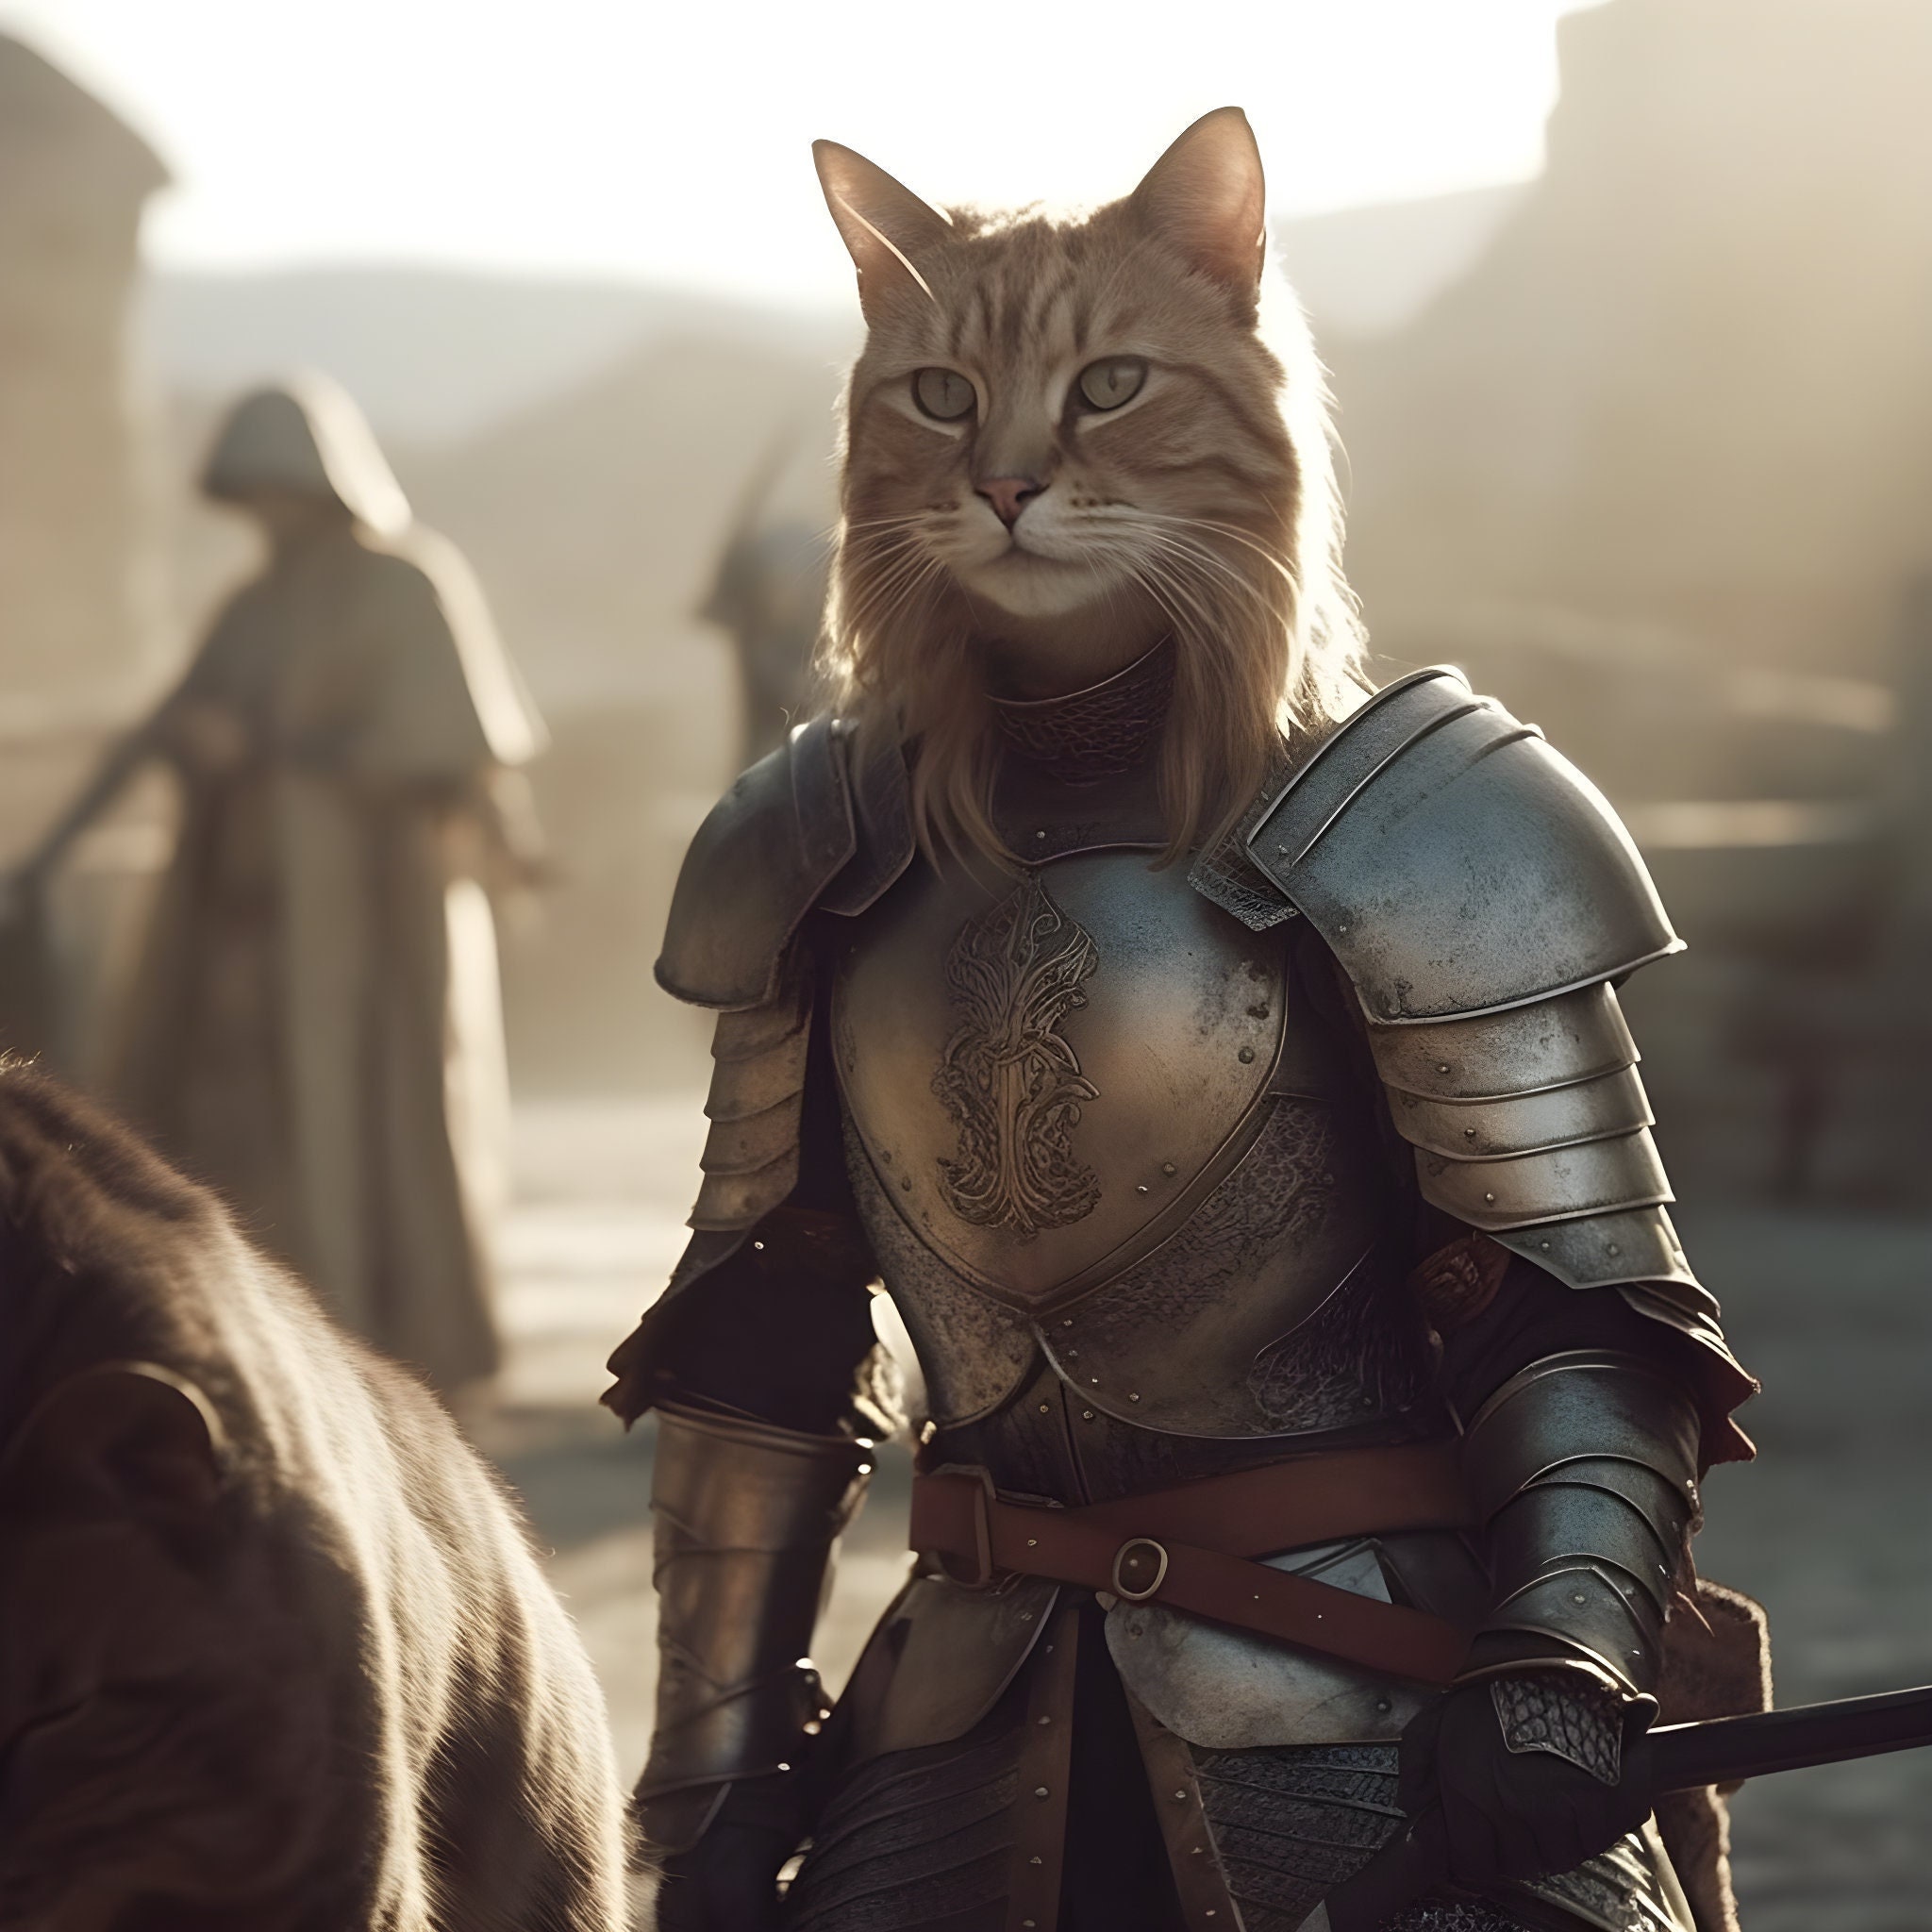 Cat battle armor - .de